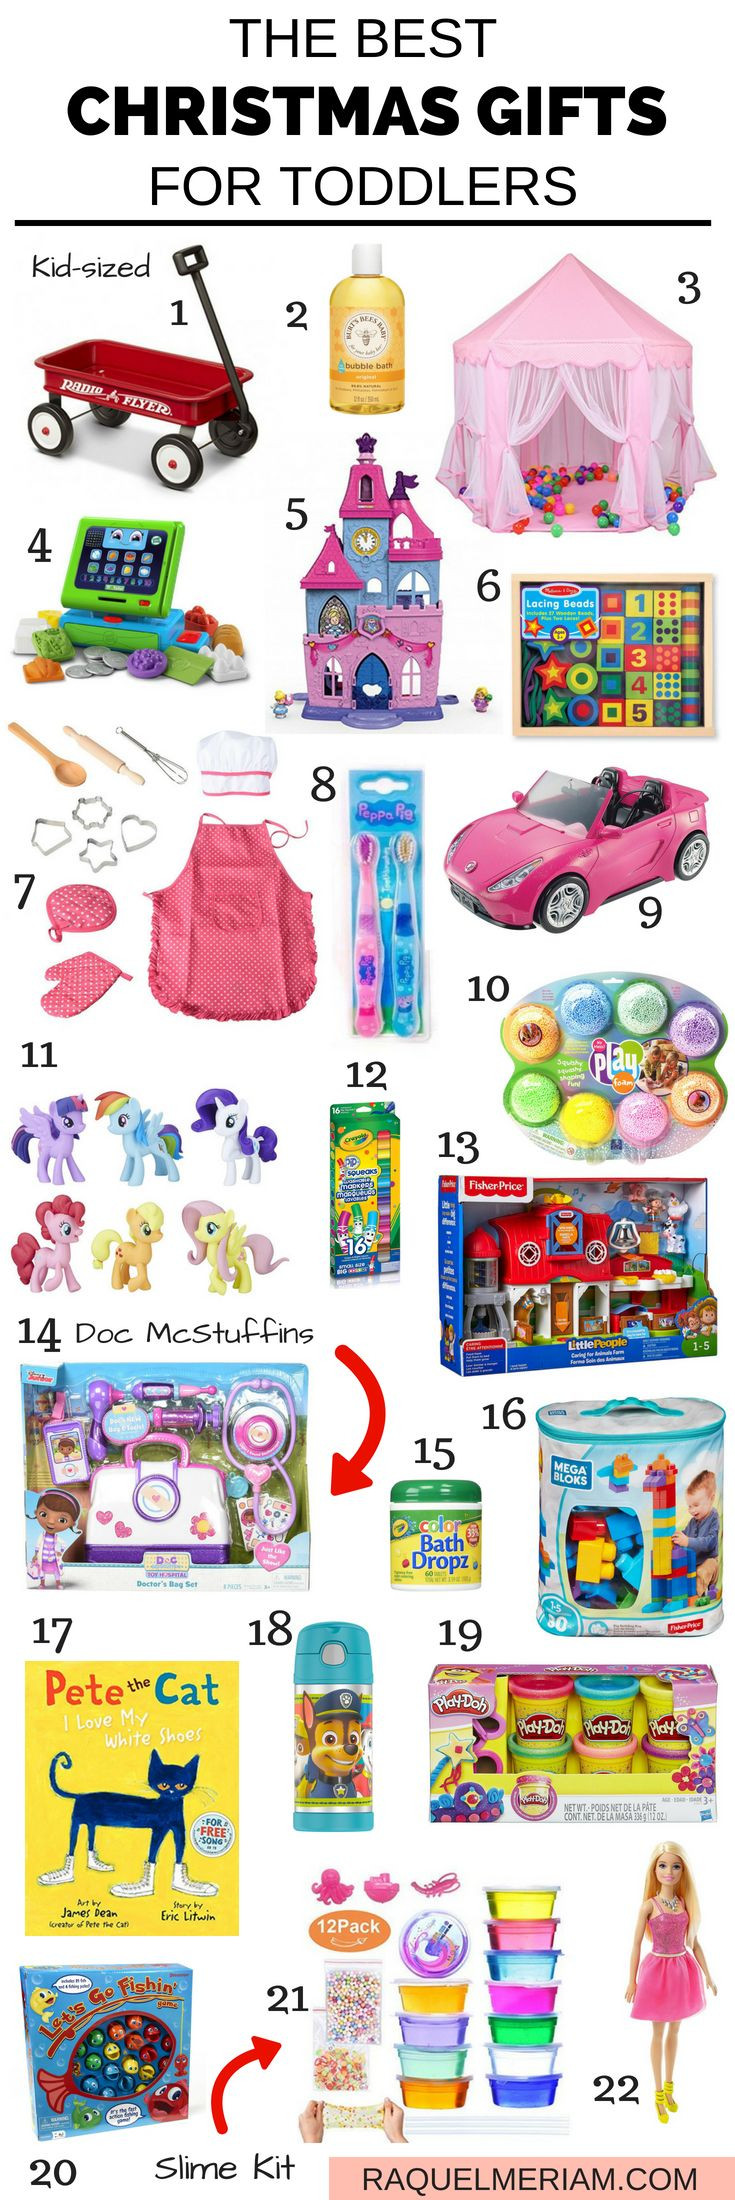 Gift Ideas For Toddler Girls
 The Best Christmas Gift Ideas for Toddler Girls